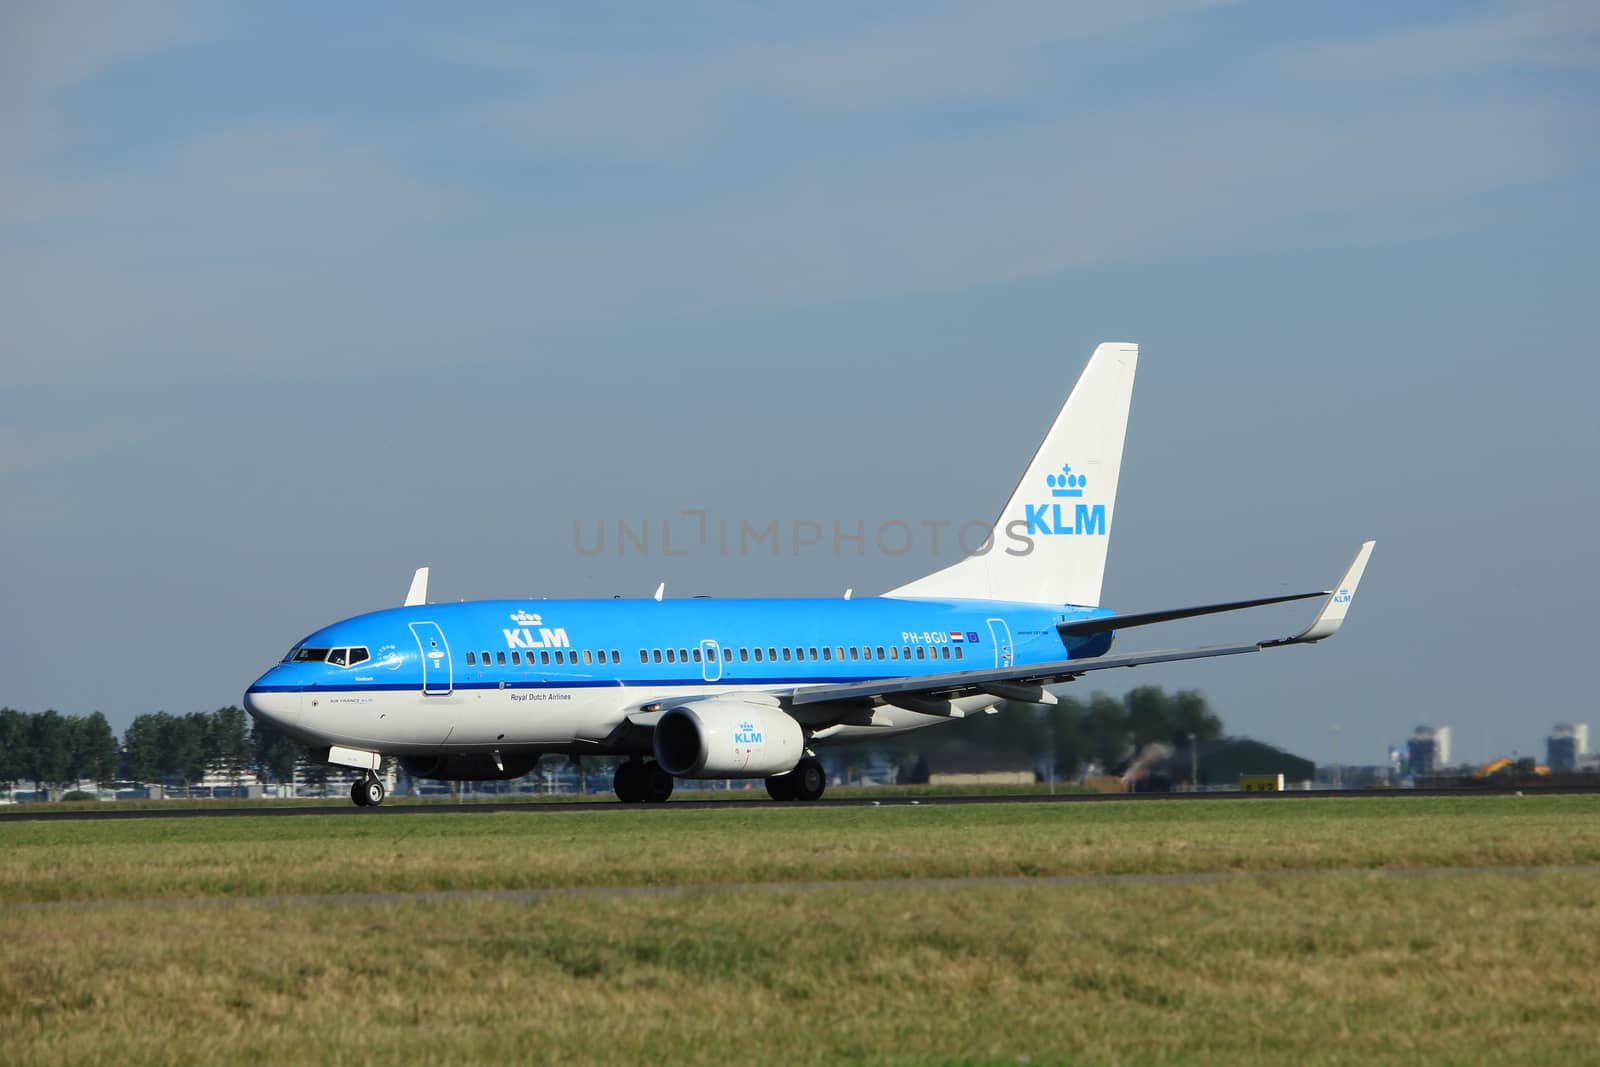 Amsterdam, the Netherlands  - August, 18th 2016: PH-BGU KLM Royal Dutch Airlines Boeing 737,
taking off from Polderbaan Runway Amsterdam Airport Schiphol